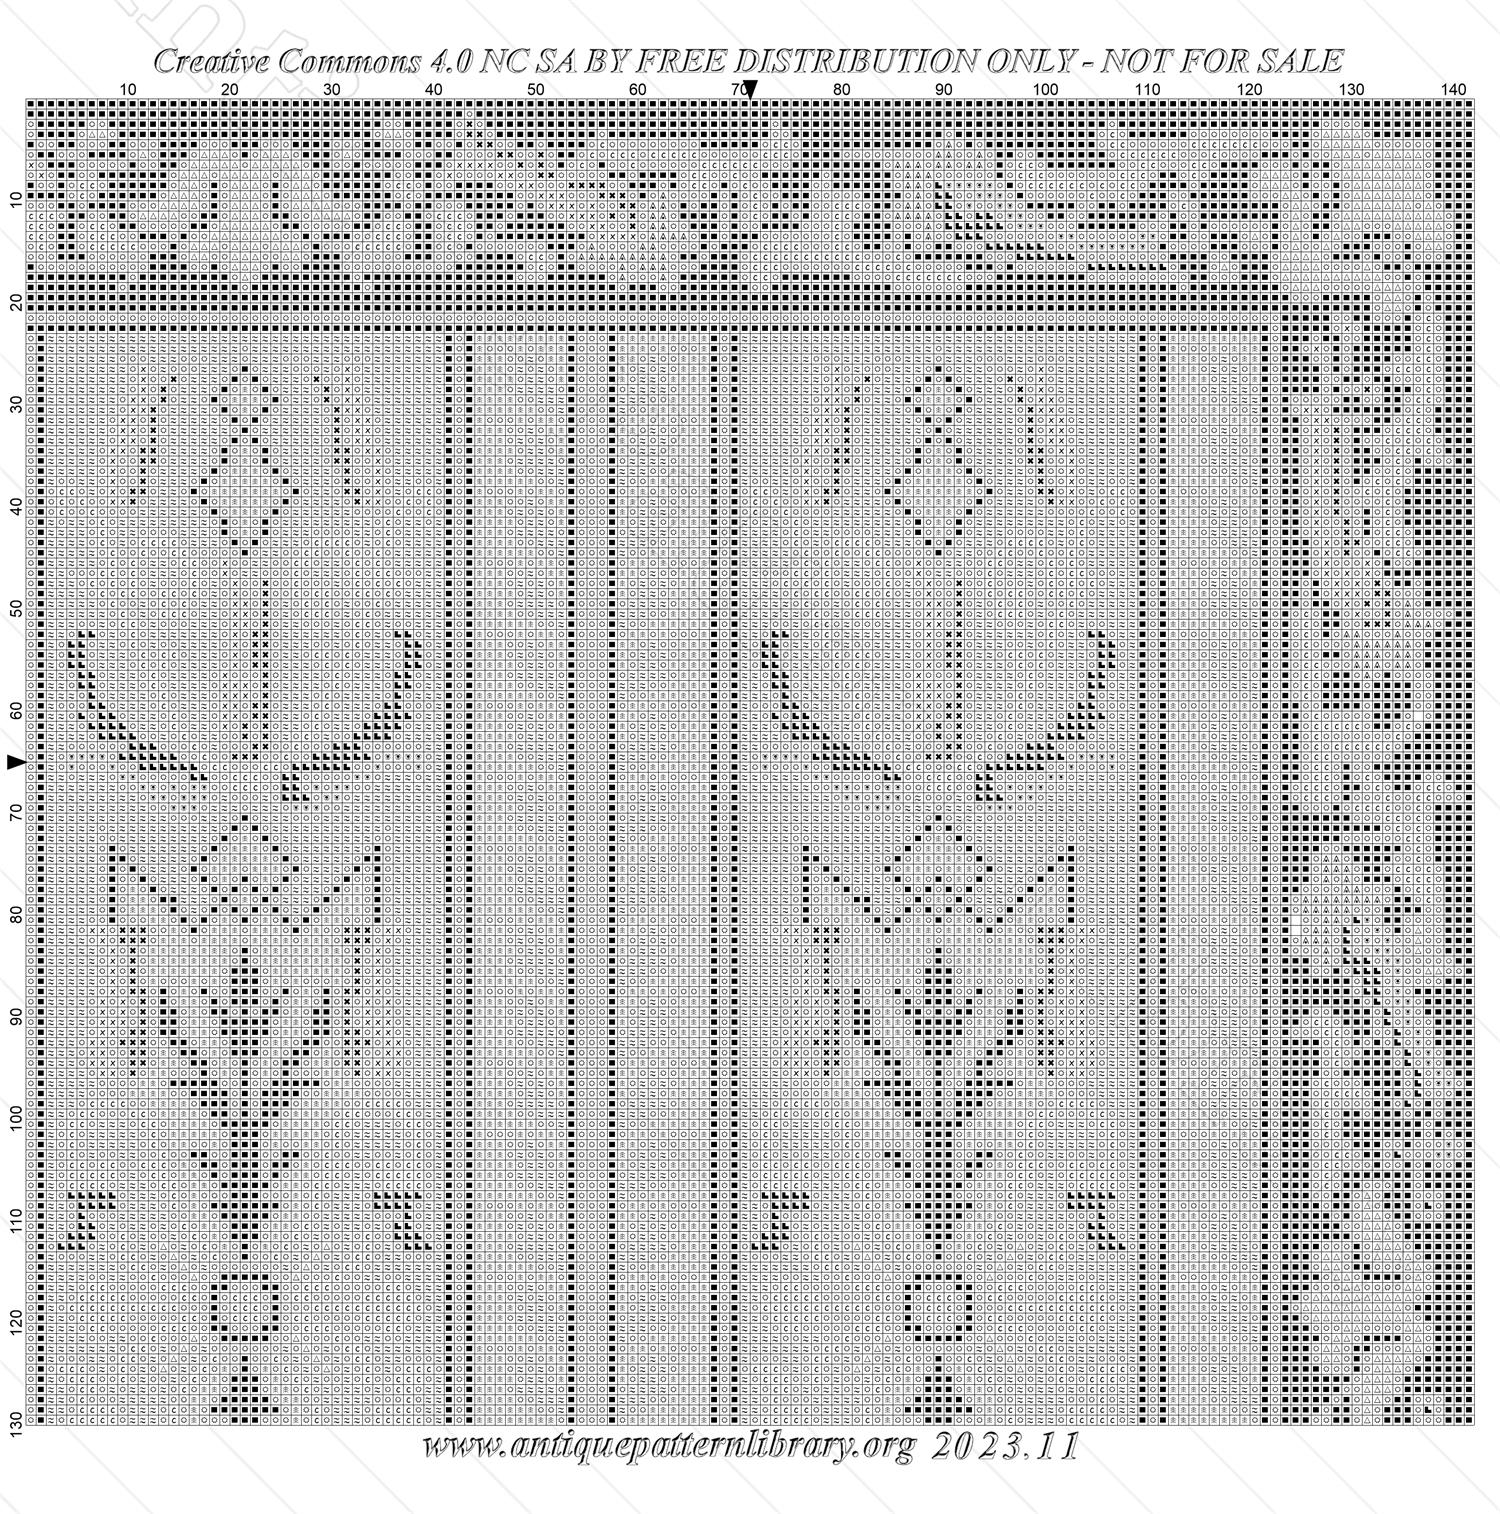 A-MH046 Quarter pattern of a square design